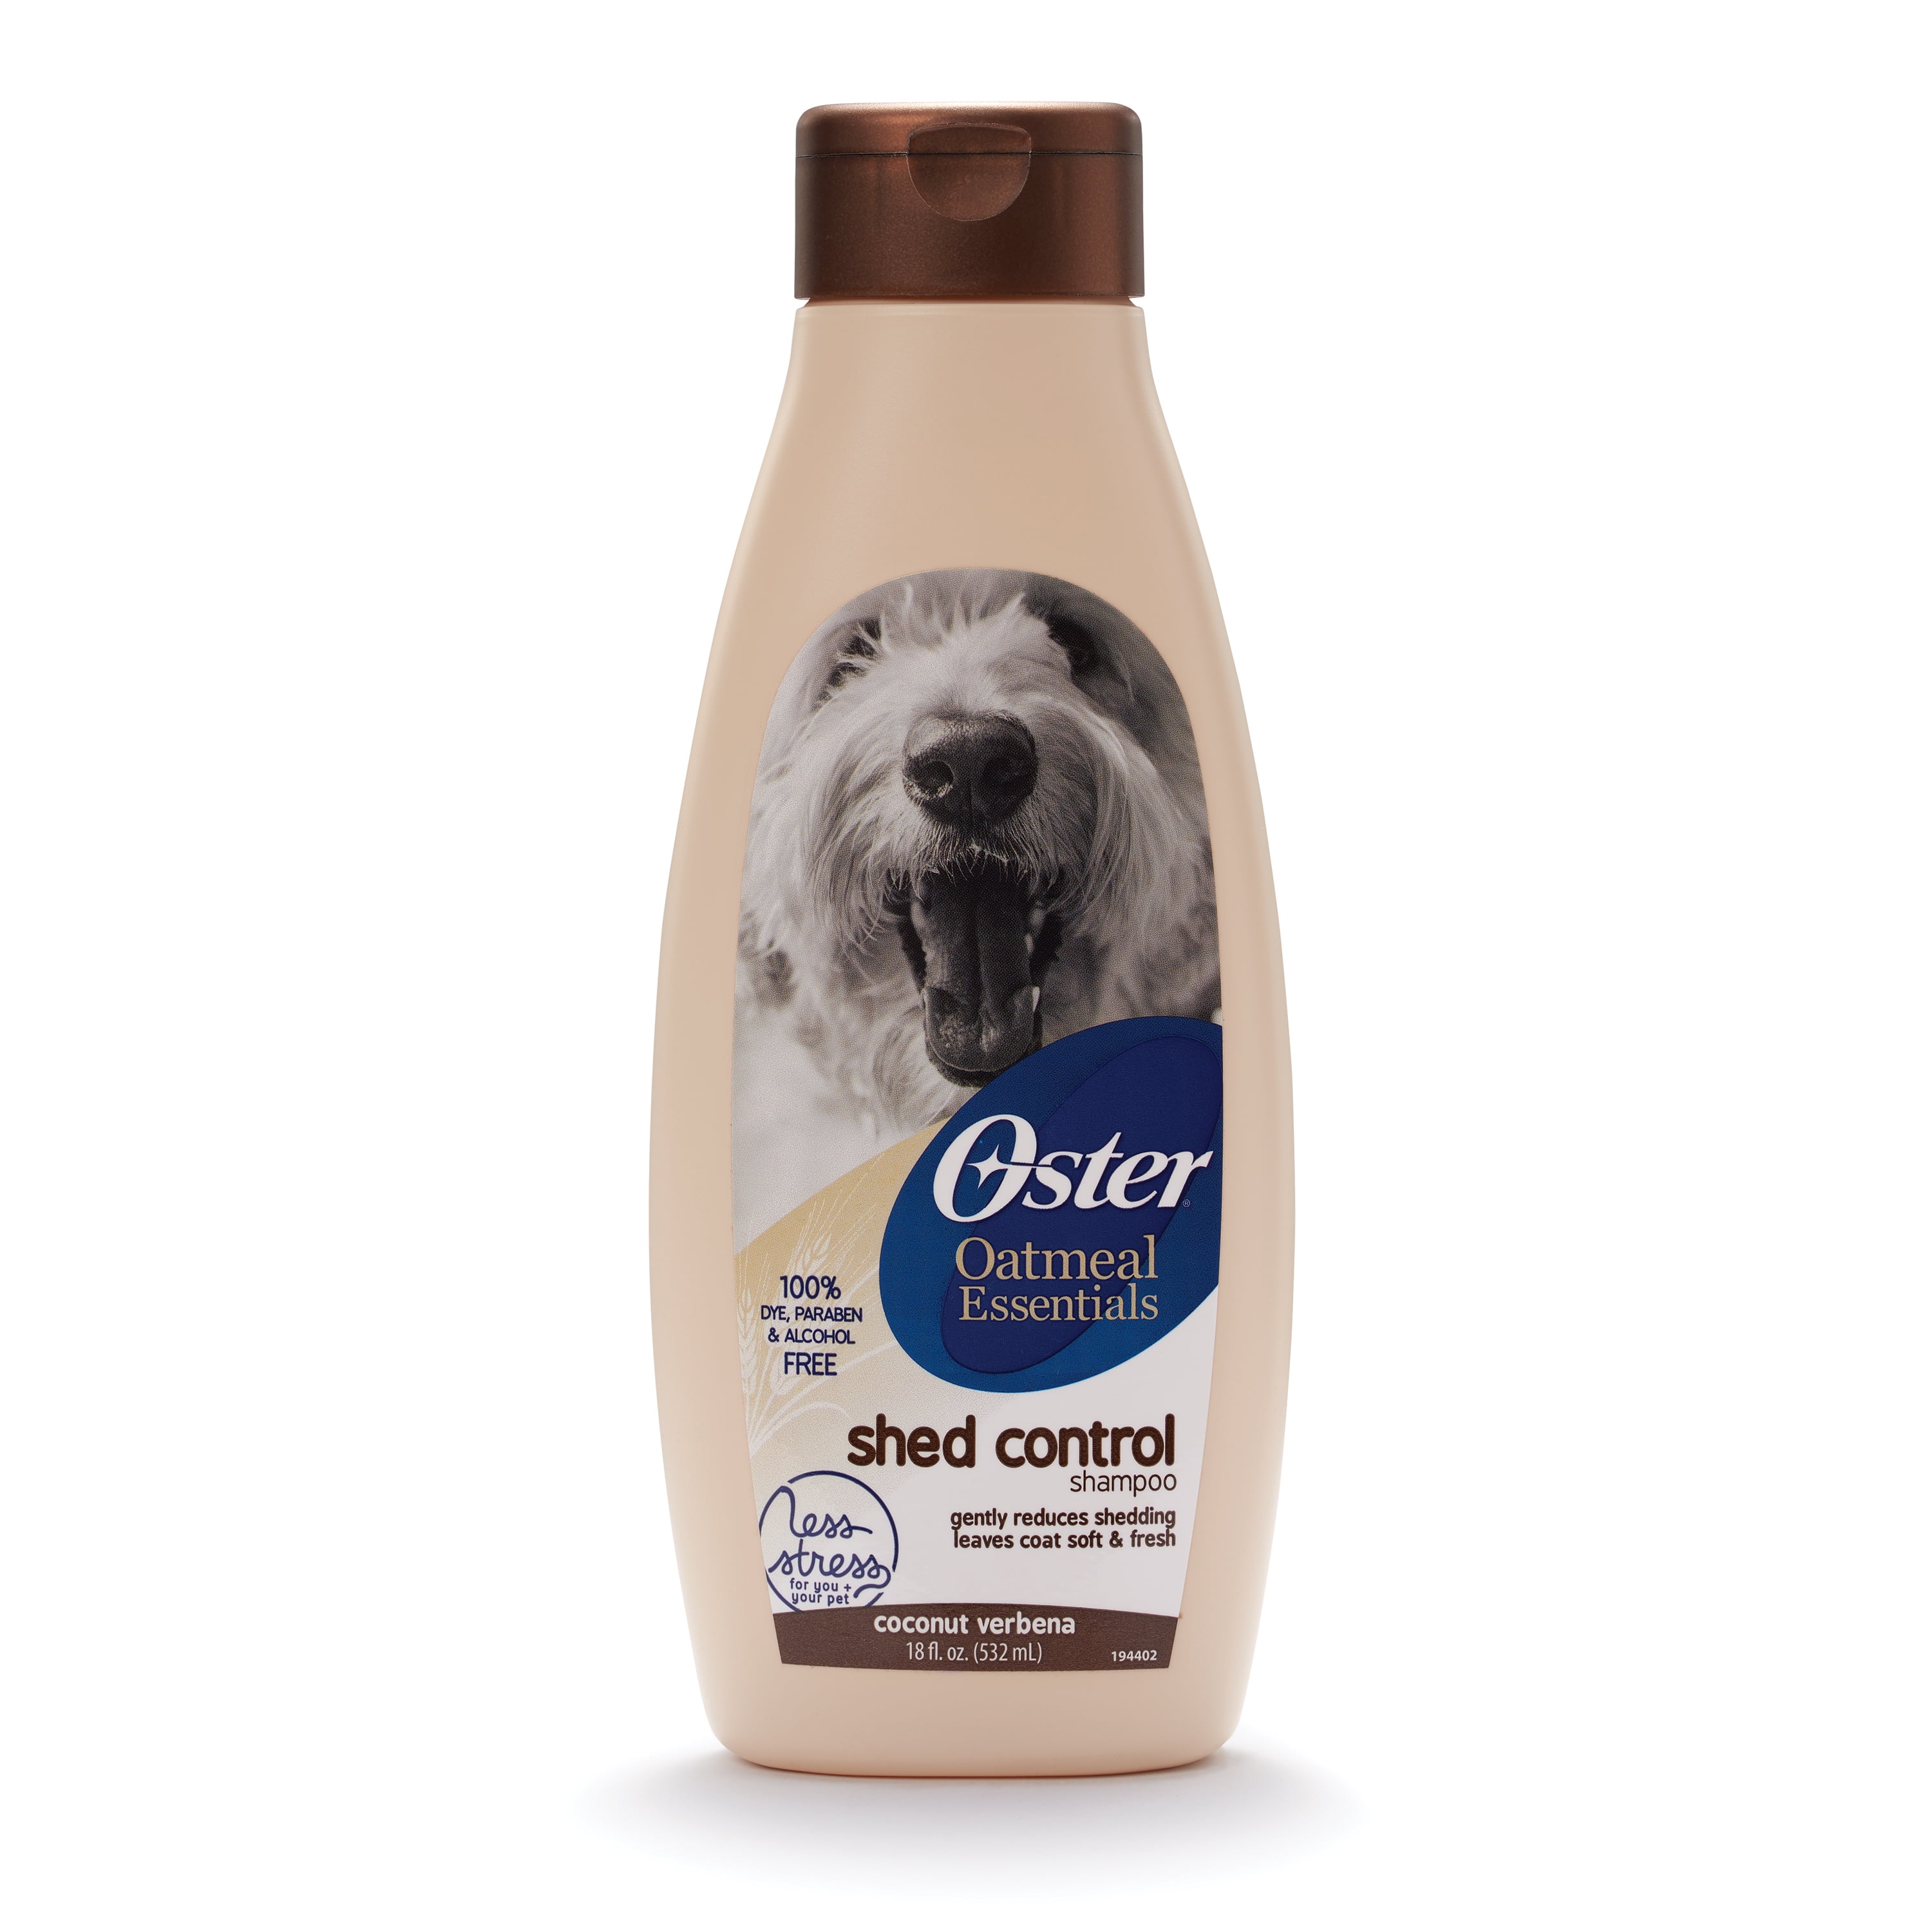 Oster Oatmeal Essentials Shed Control Dog Shampoo, Coconut Verbena, 18